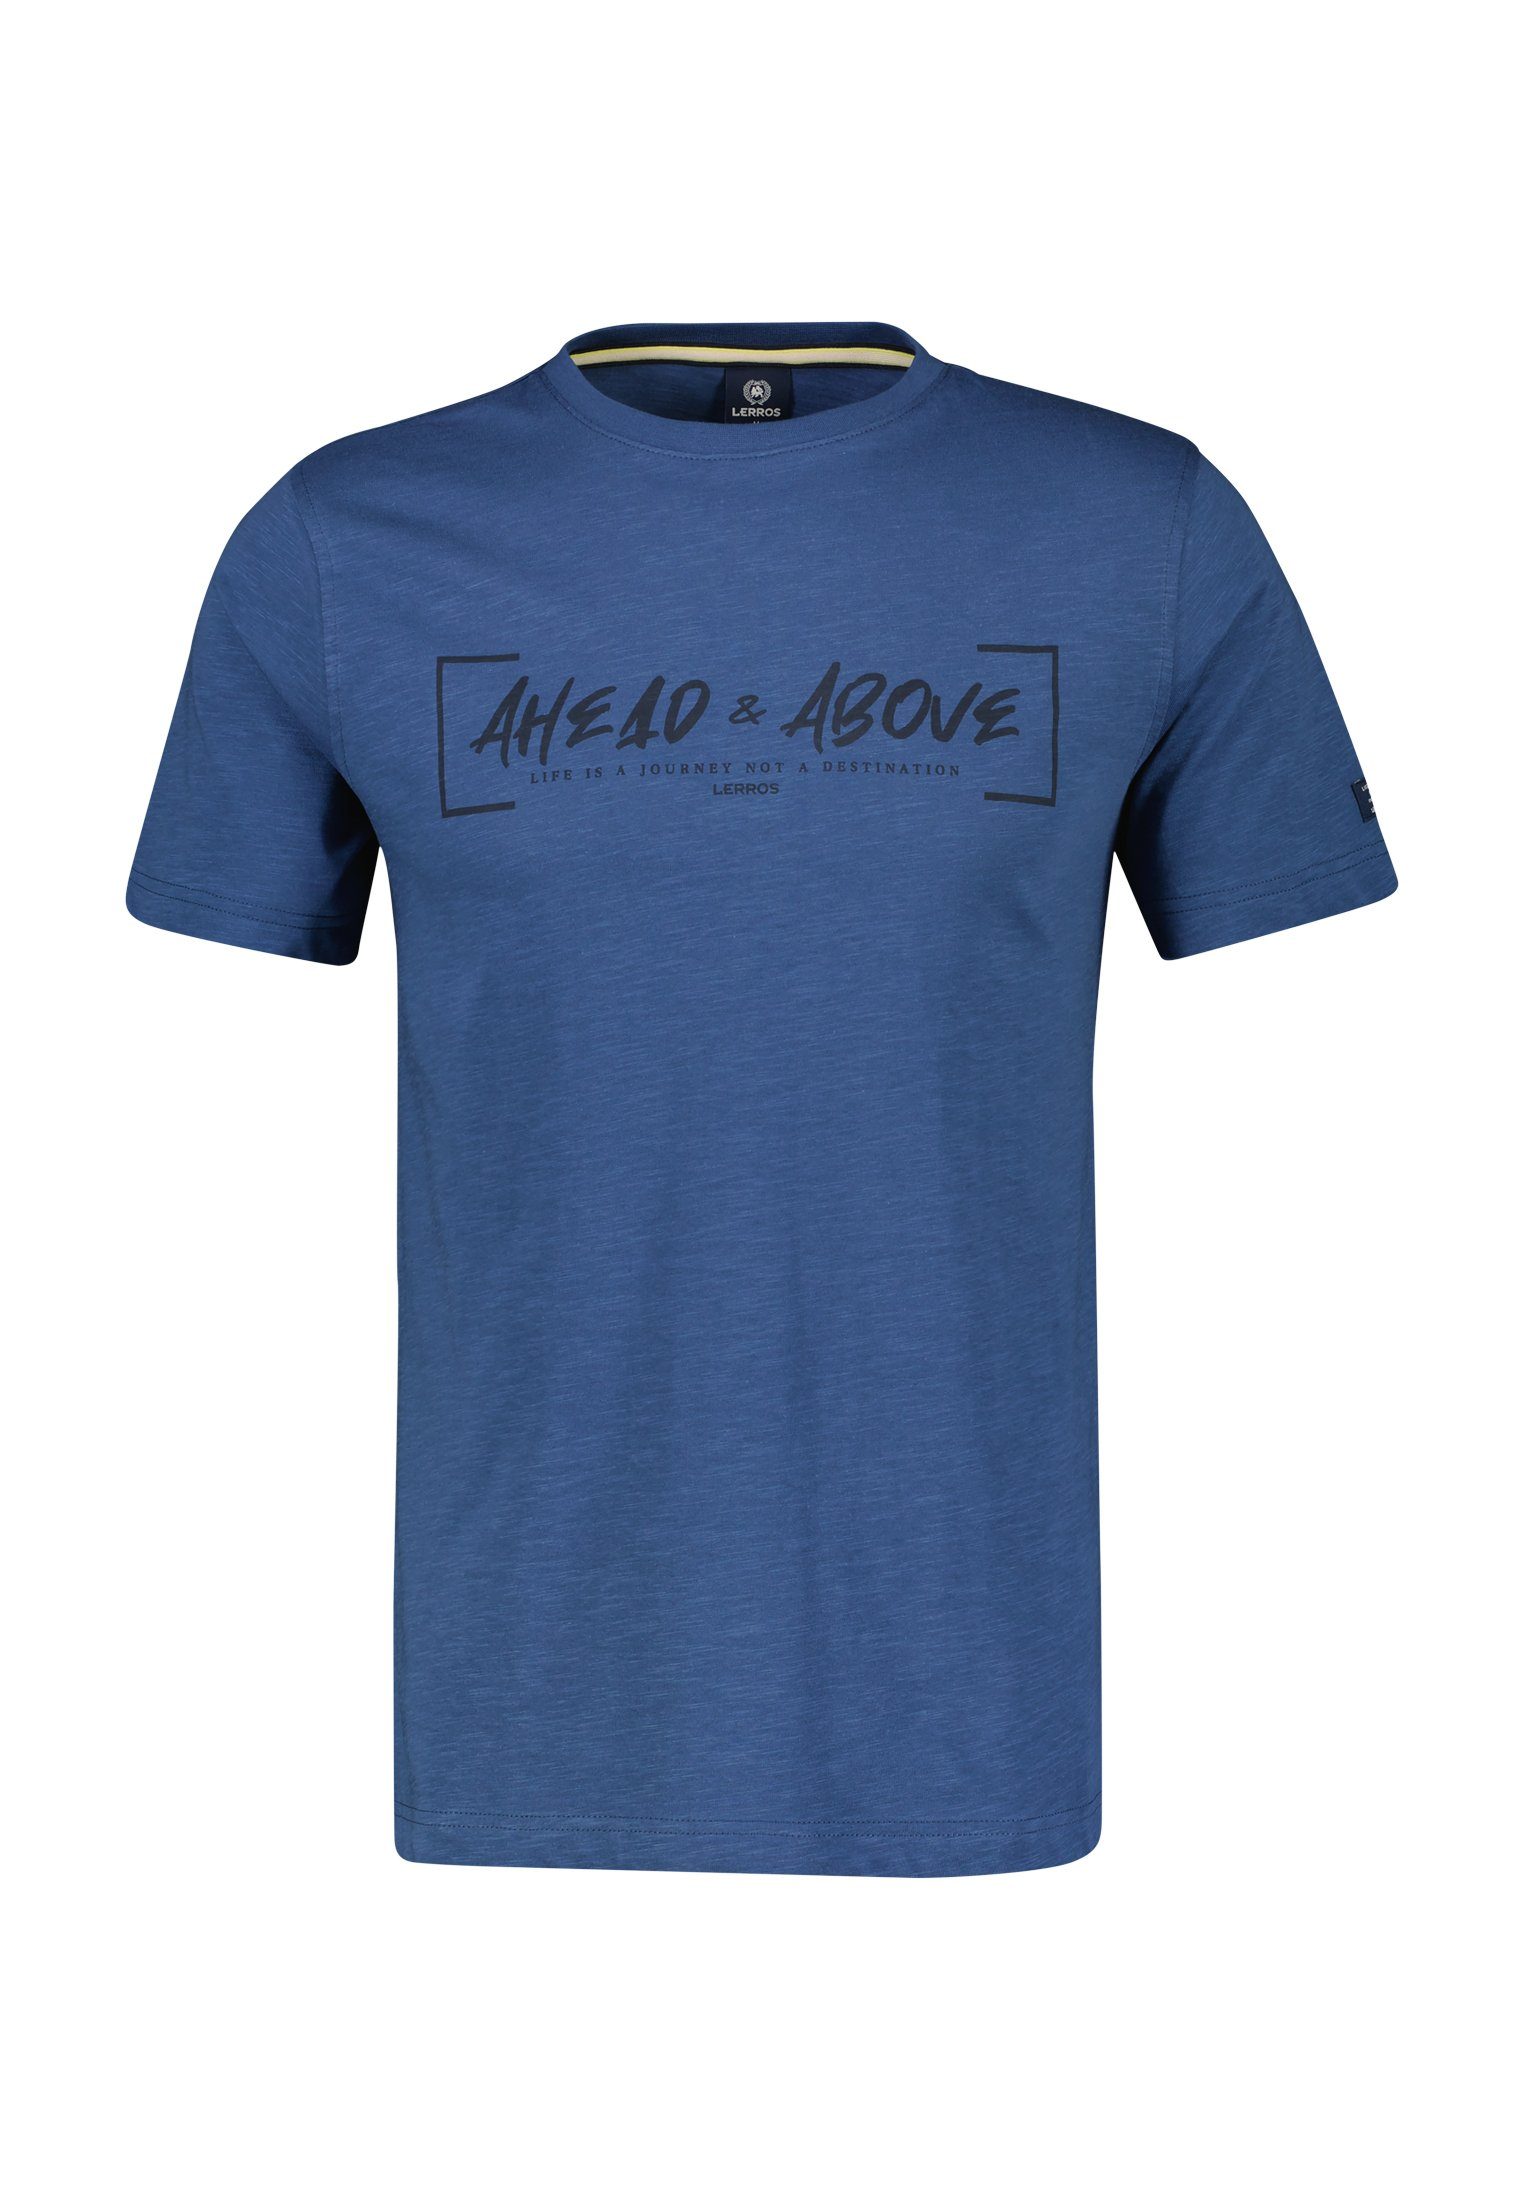 T-Shirt & *Ahead TRAVEL LERROS Above* BLUE T-Shirt LERROS